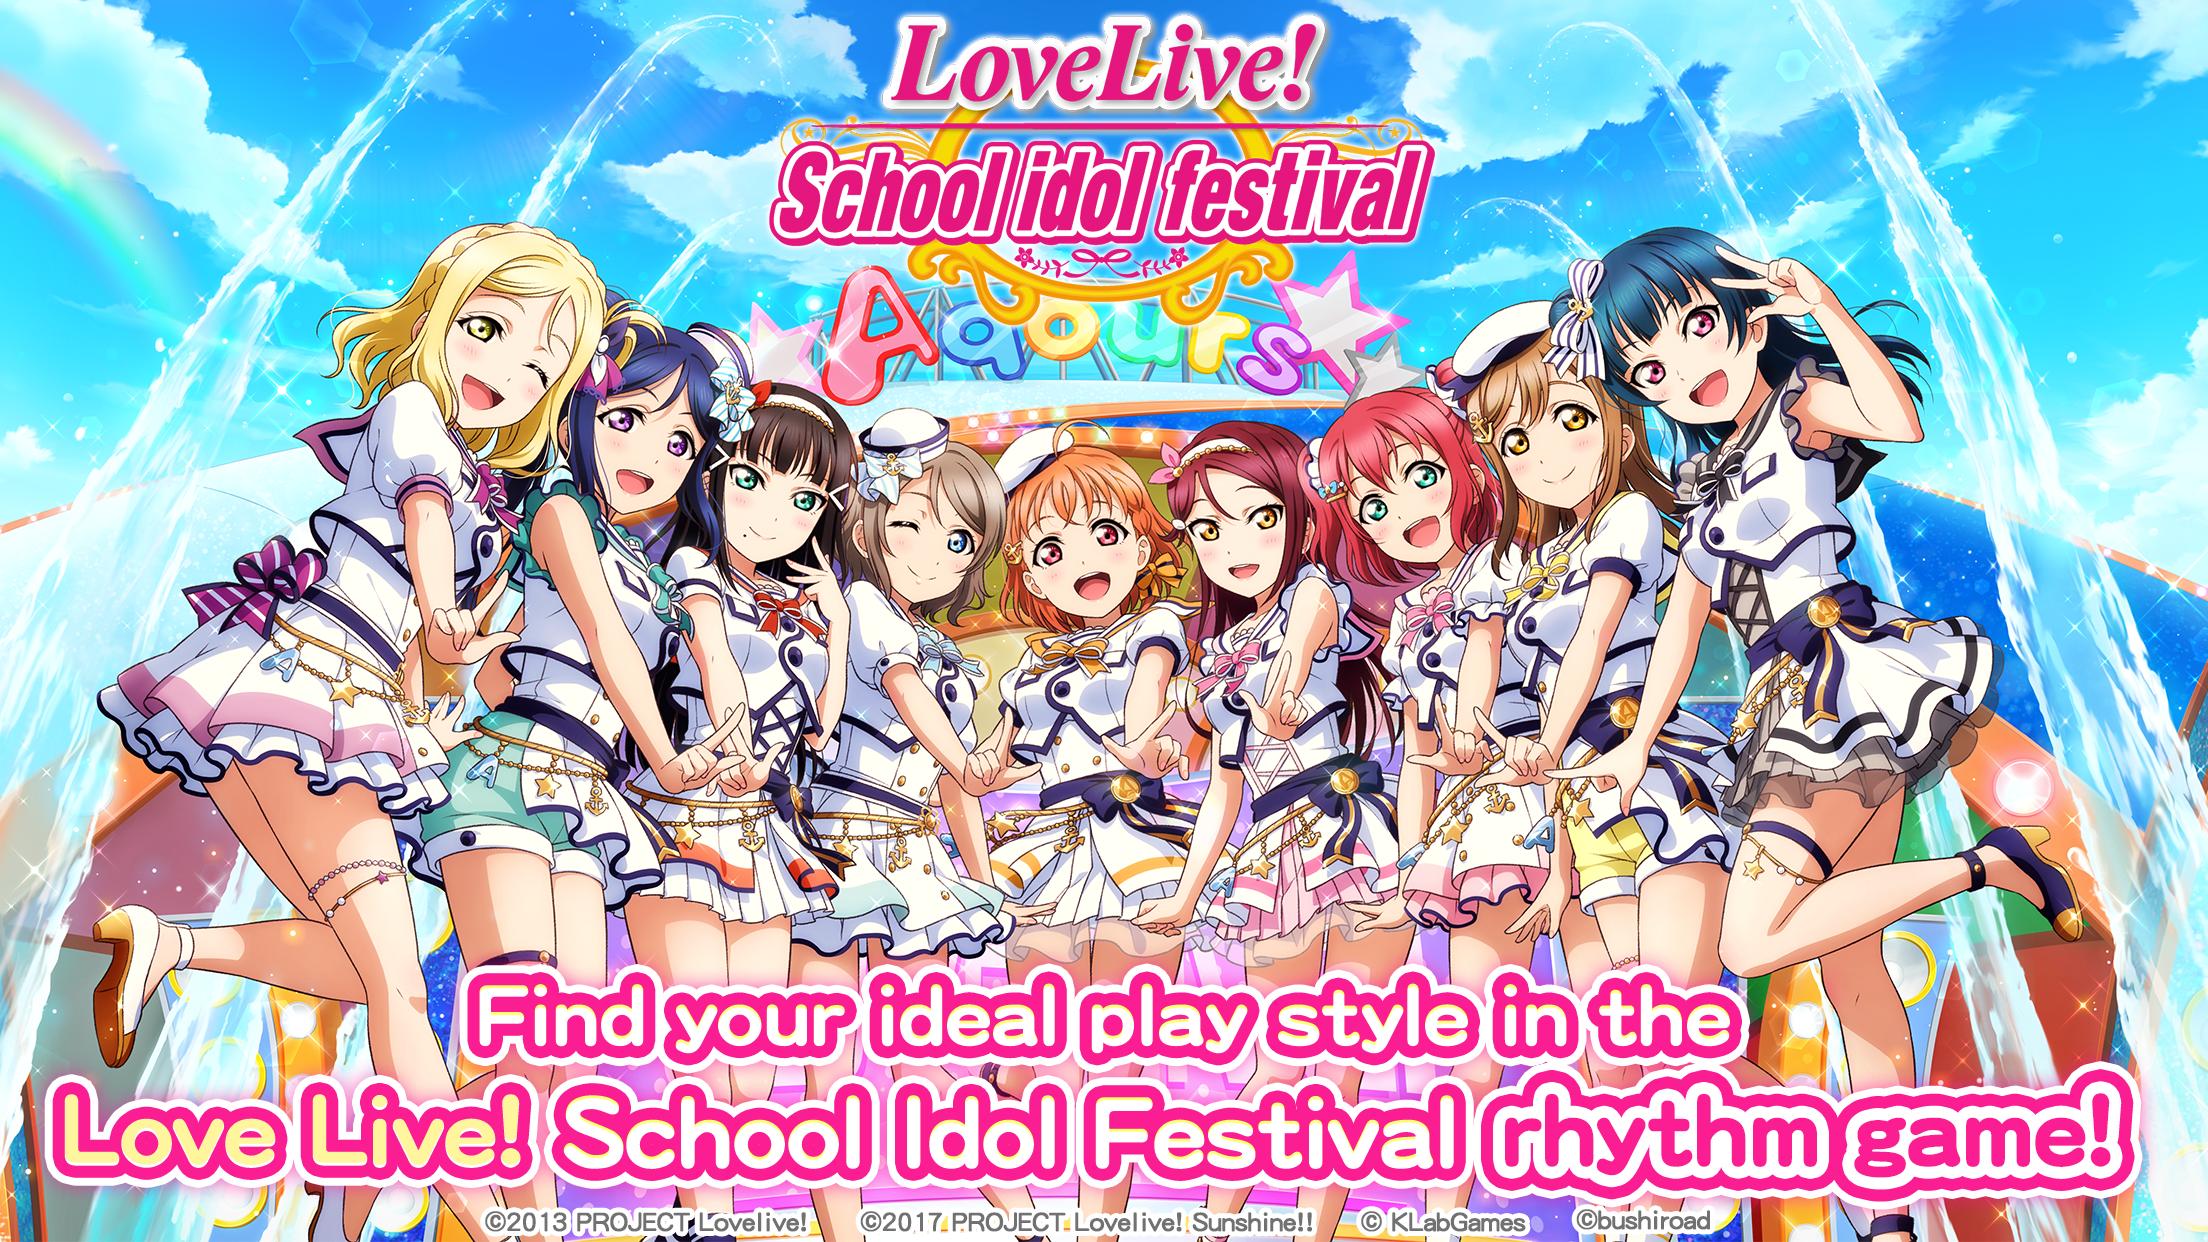 Love Live! School idol festival- Music Rhythm Game 6.9.2 Screenshot 1